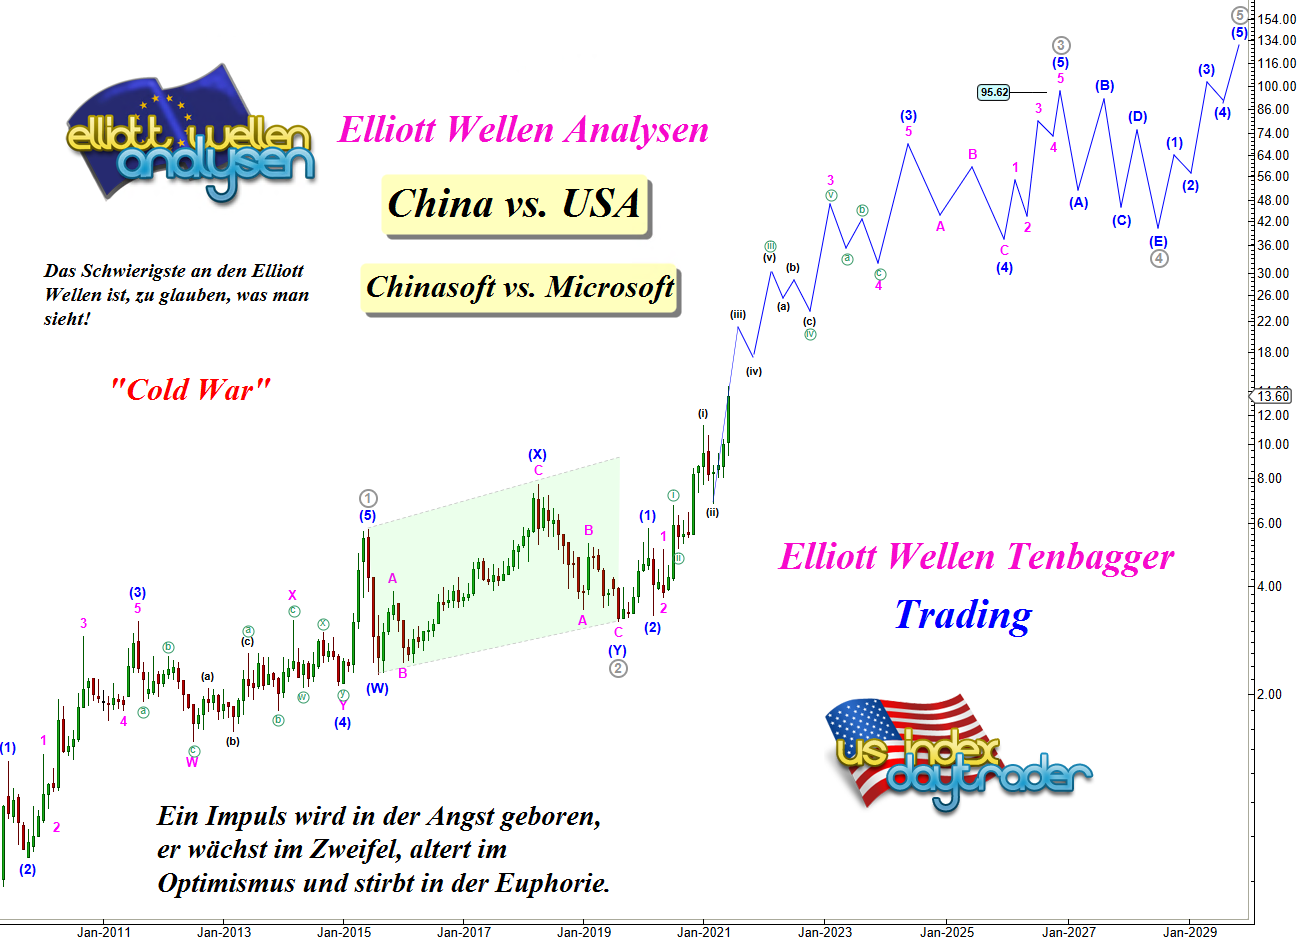 EW-Analyze-China-vs-USA-Chinasoft-vs-Microsoft-Update-André-Tiedje-GodmodeTrader.de-1